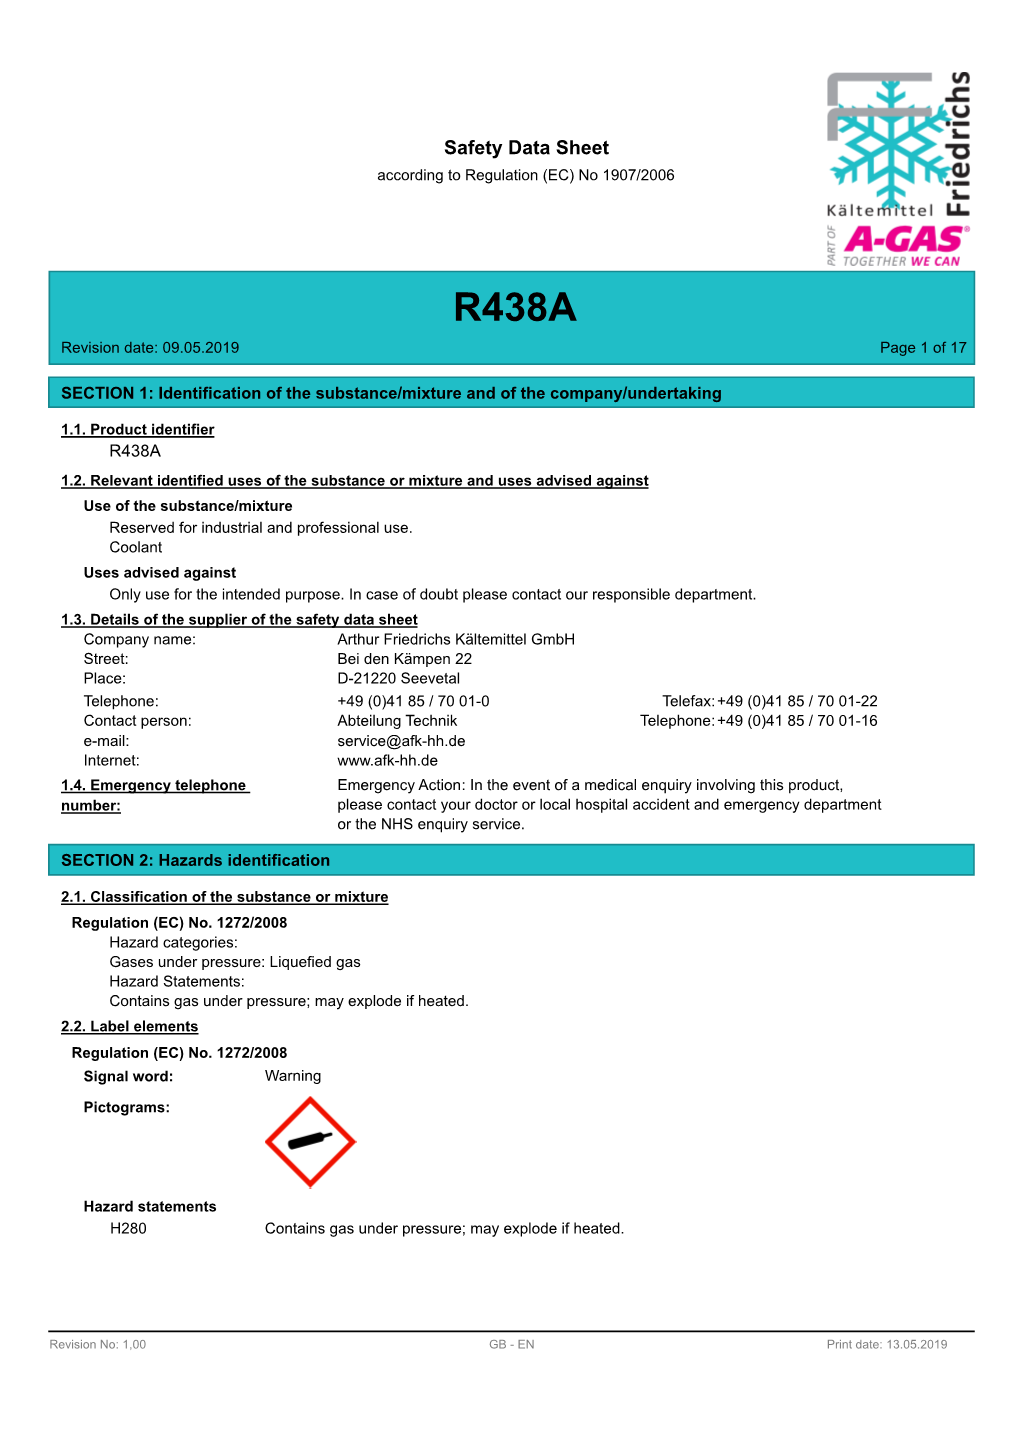 Safety Data Sheet According to Regulation (EC) No 1907/2006